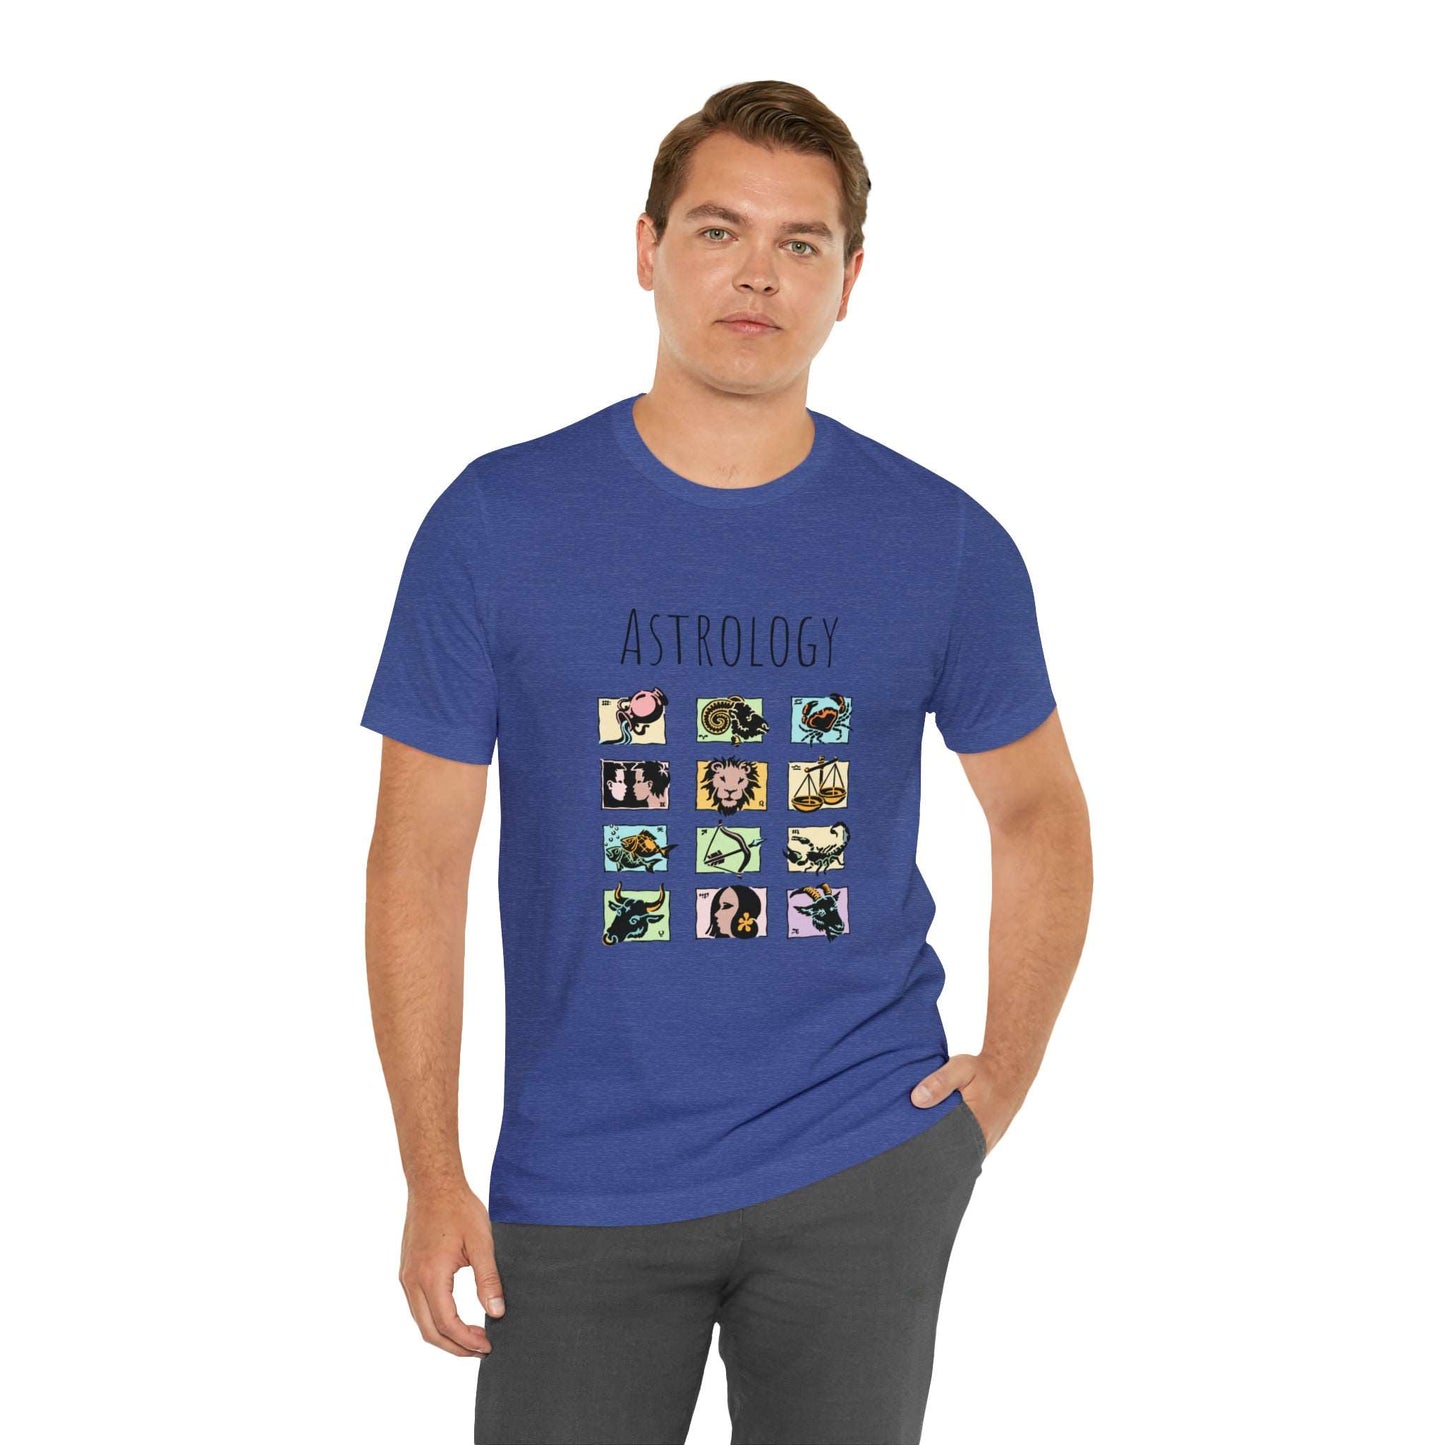 Astrology Tee Shirt | Horoscope Inspired Art Tee Shirt | Space Astrology tee Shirt | Zodiac Signs Tee Shirt - CrazyTomTShirts